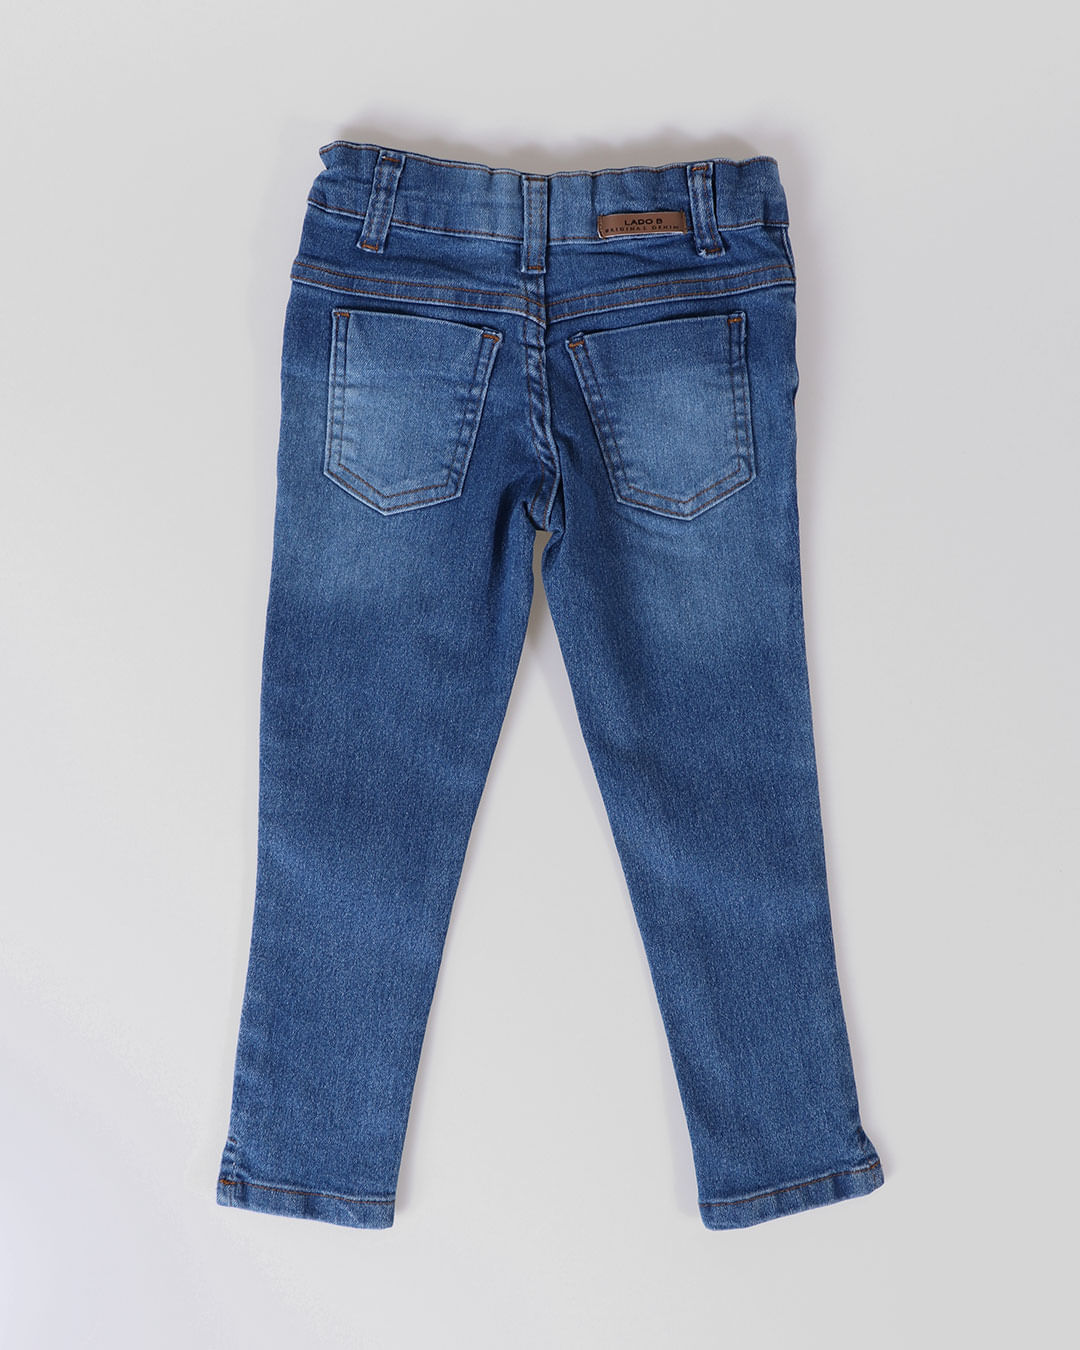 Calca-Jeans-10015-6821-Lc-Bsc-Fem-13---Blue-Jeans-Claro